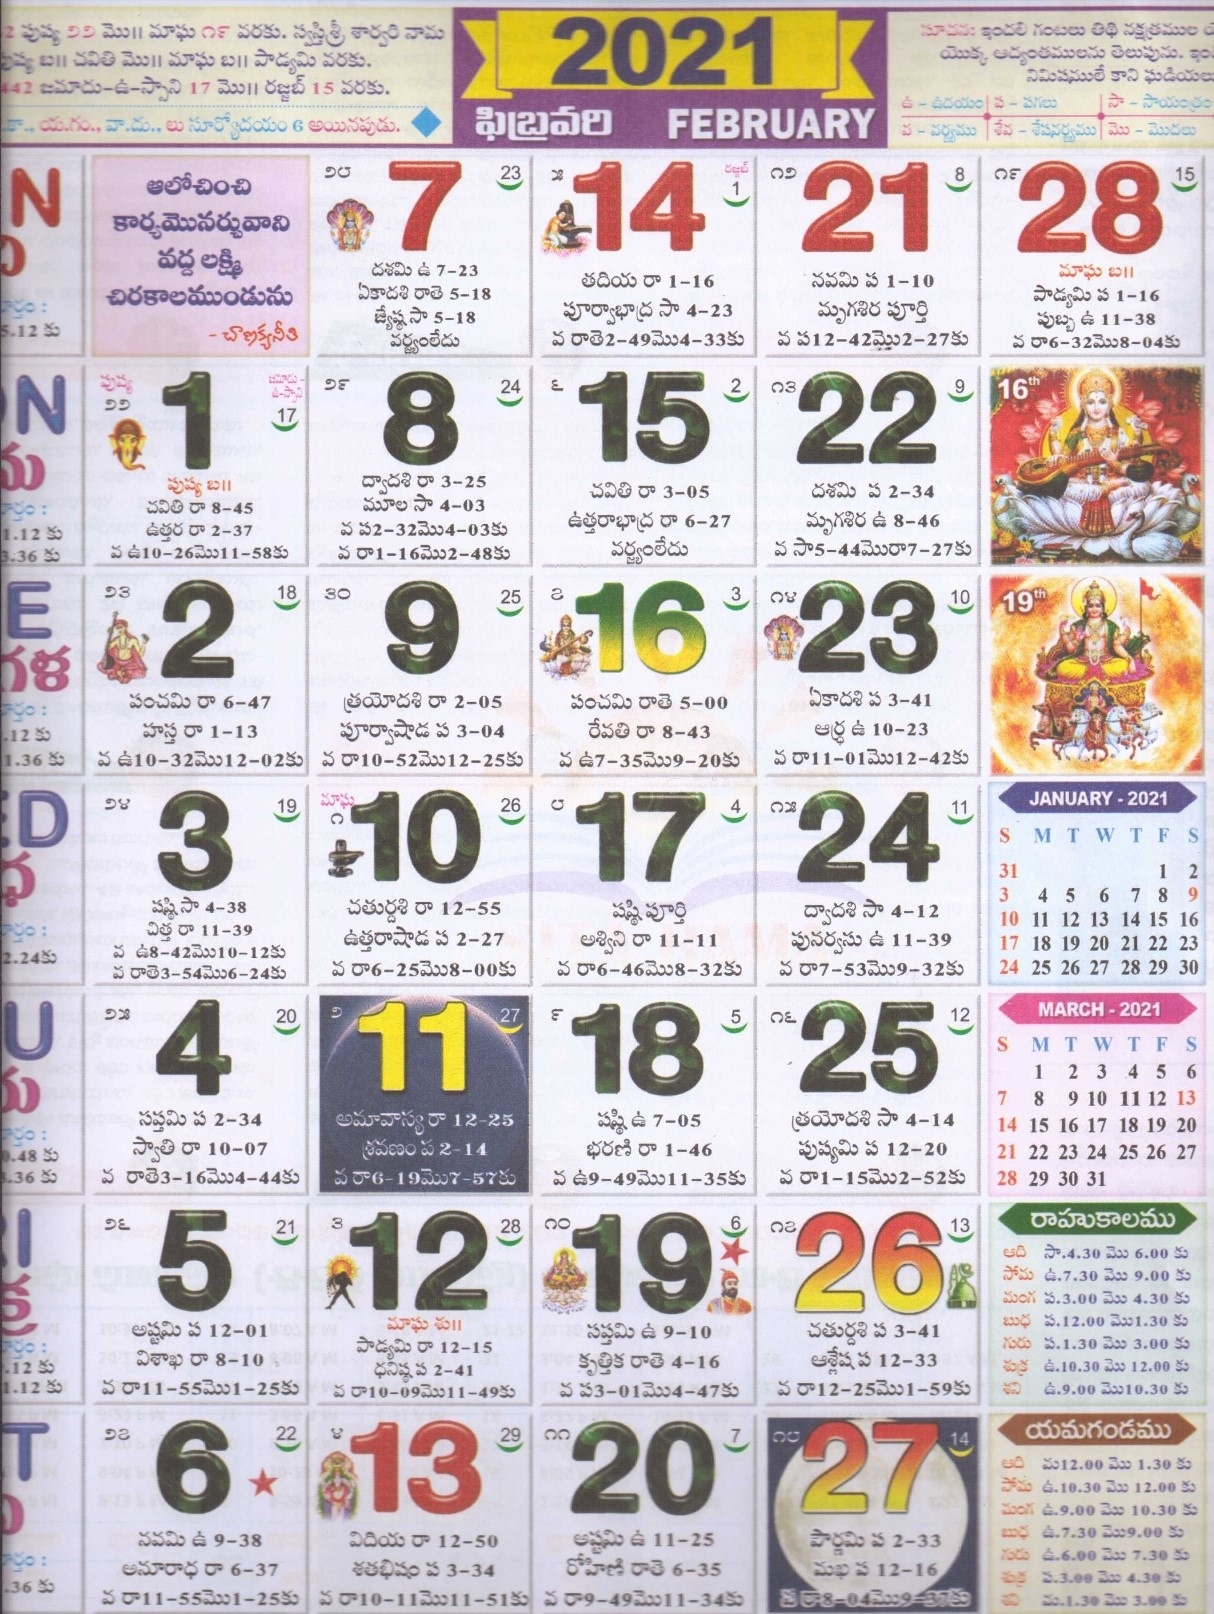 Telugu Calendar 2021 | Monthly Telugu Calendar 2021 | Telugu Panchanga Traditional Calendar October 2021 Telugu Calendar